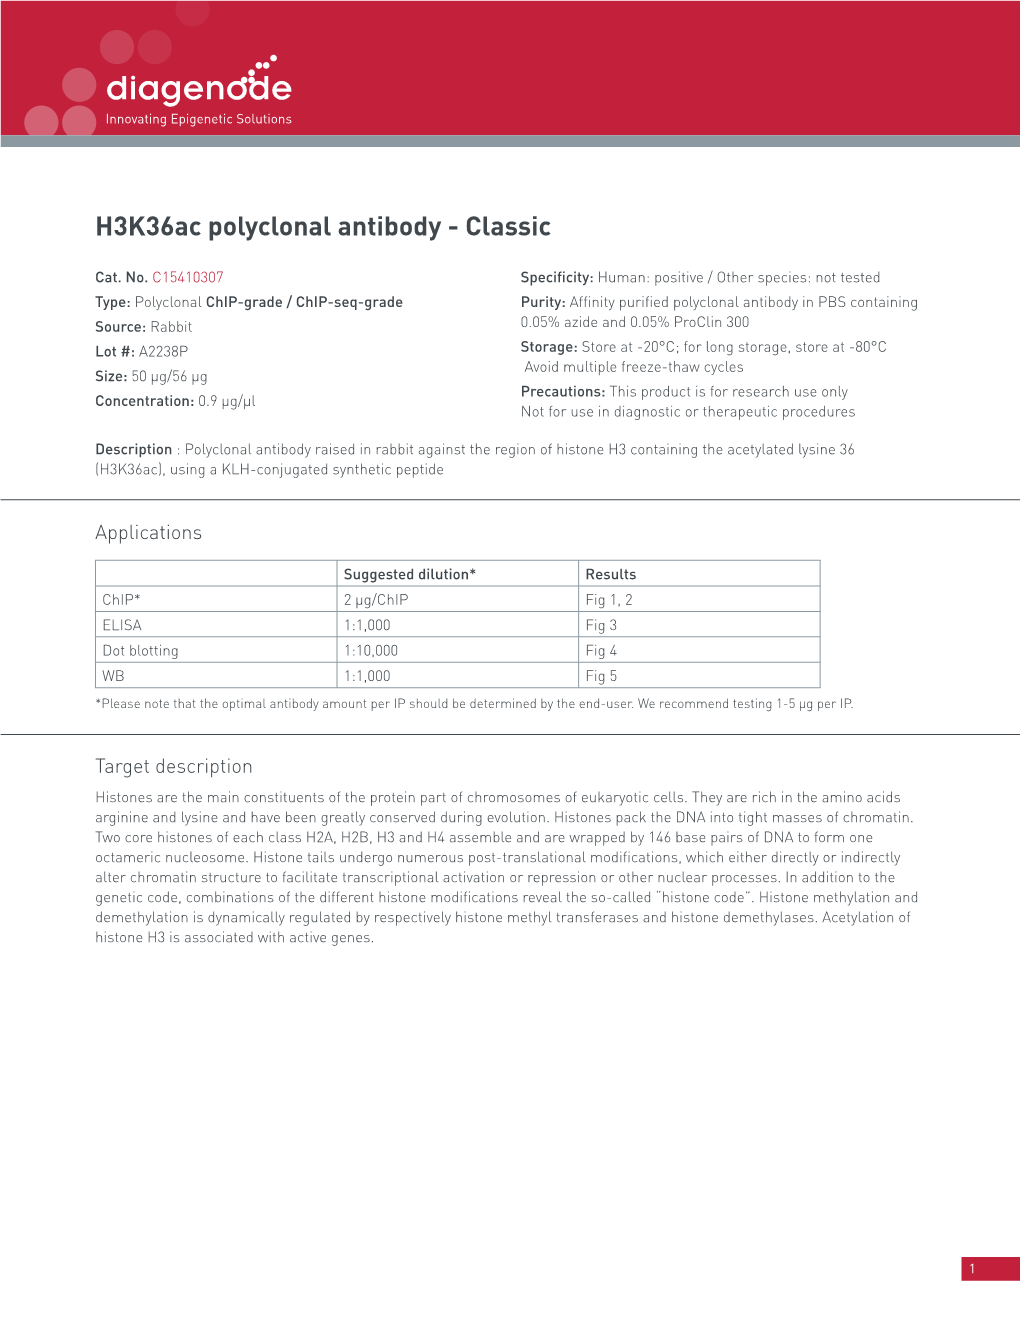 H3k36ac Polyclonal Antibody - Classic